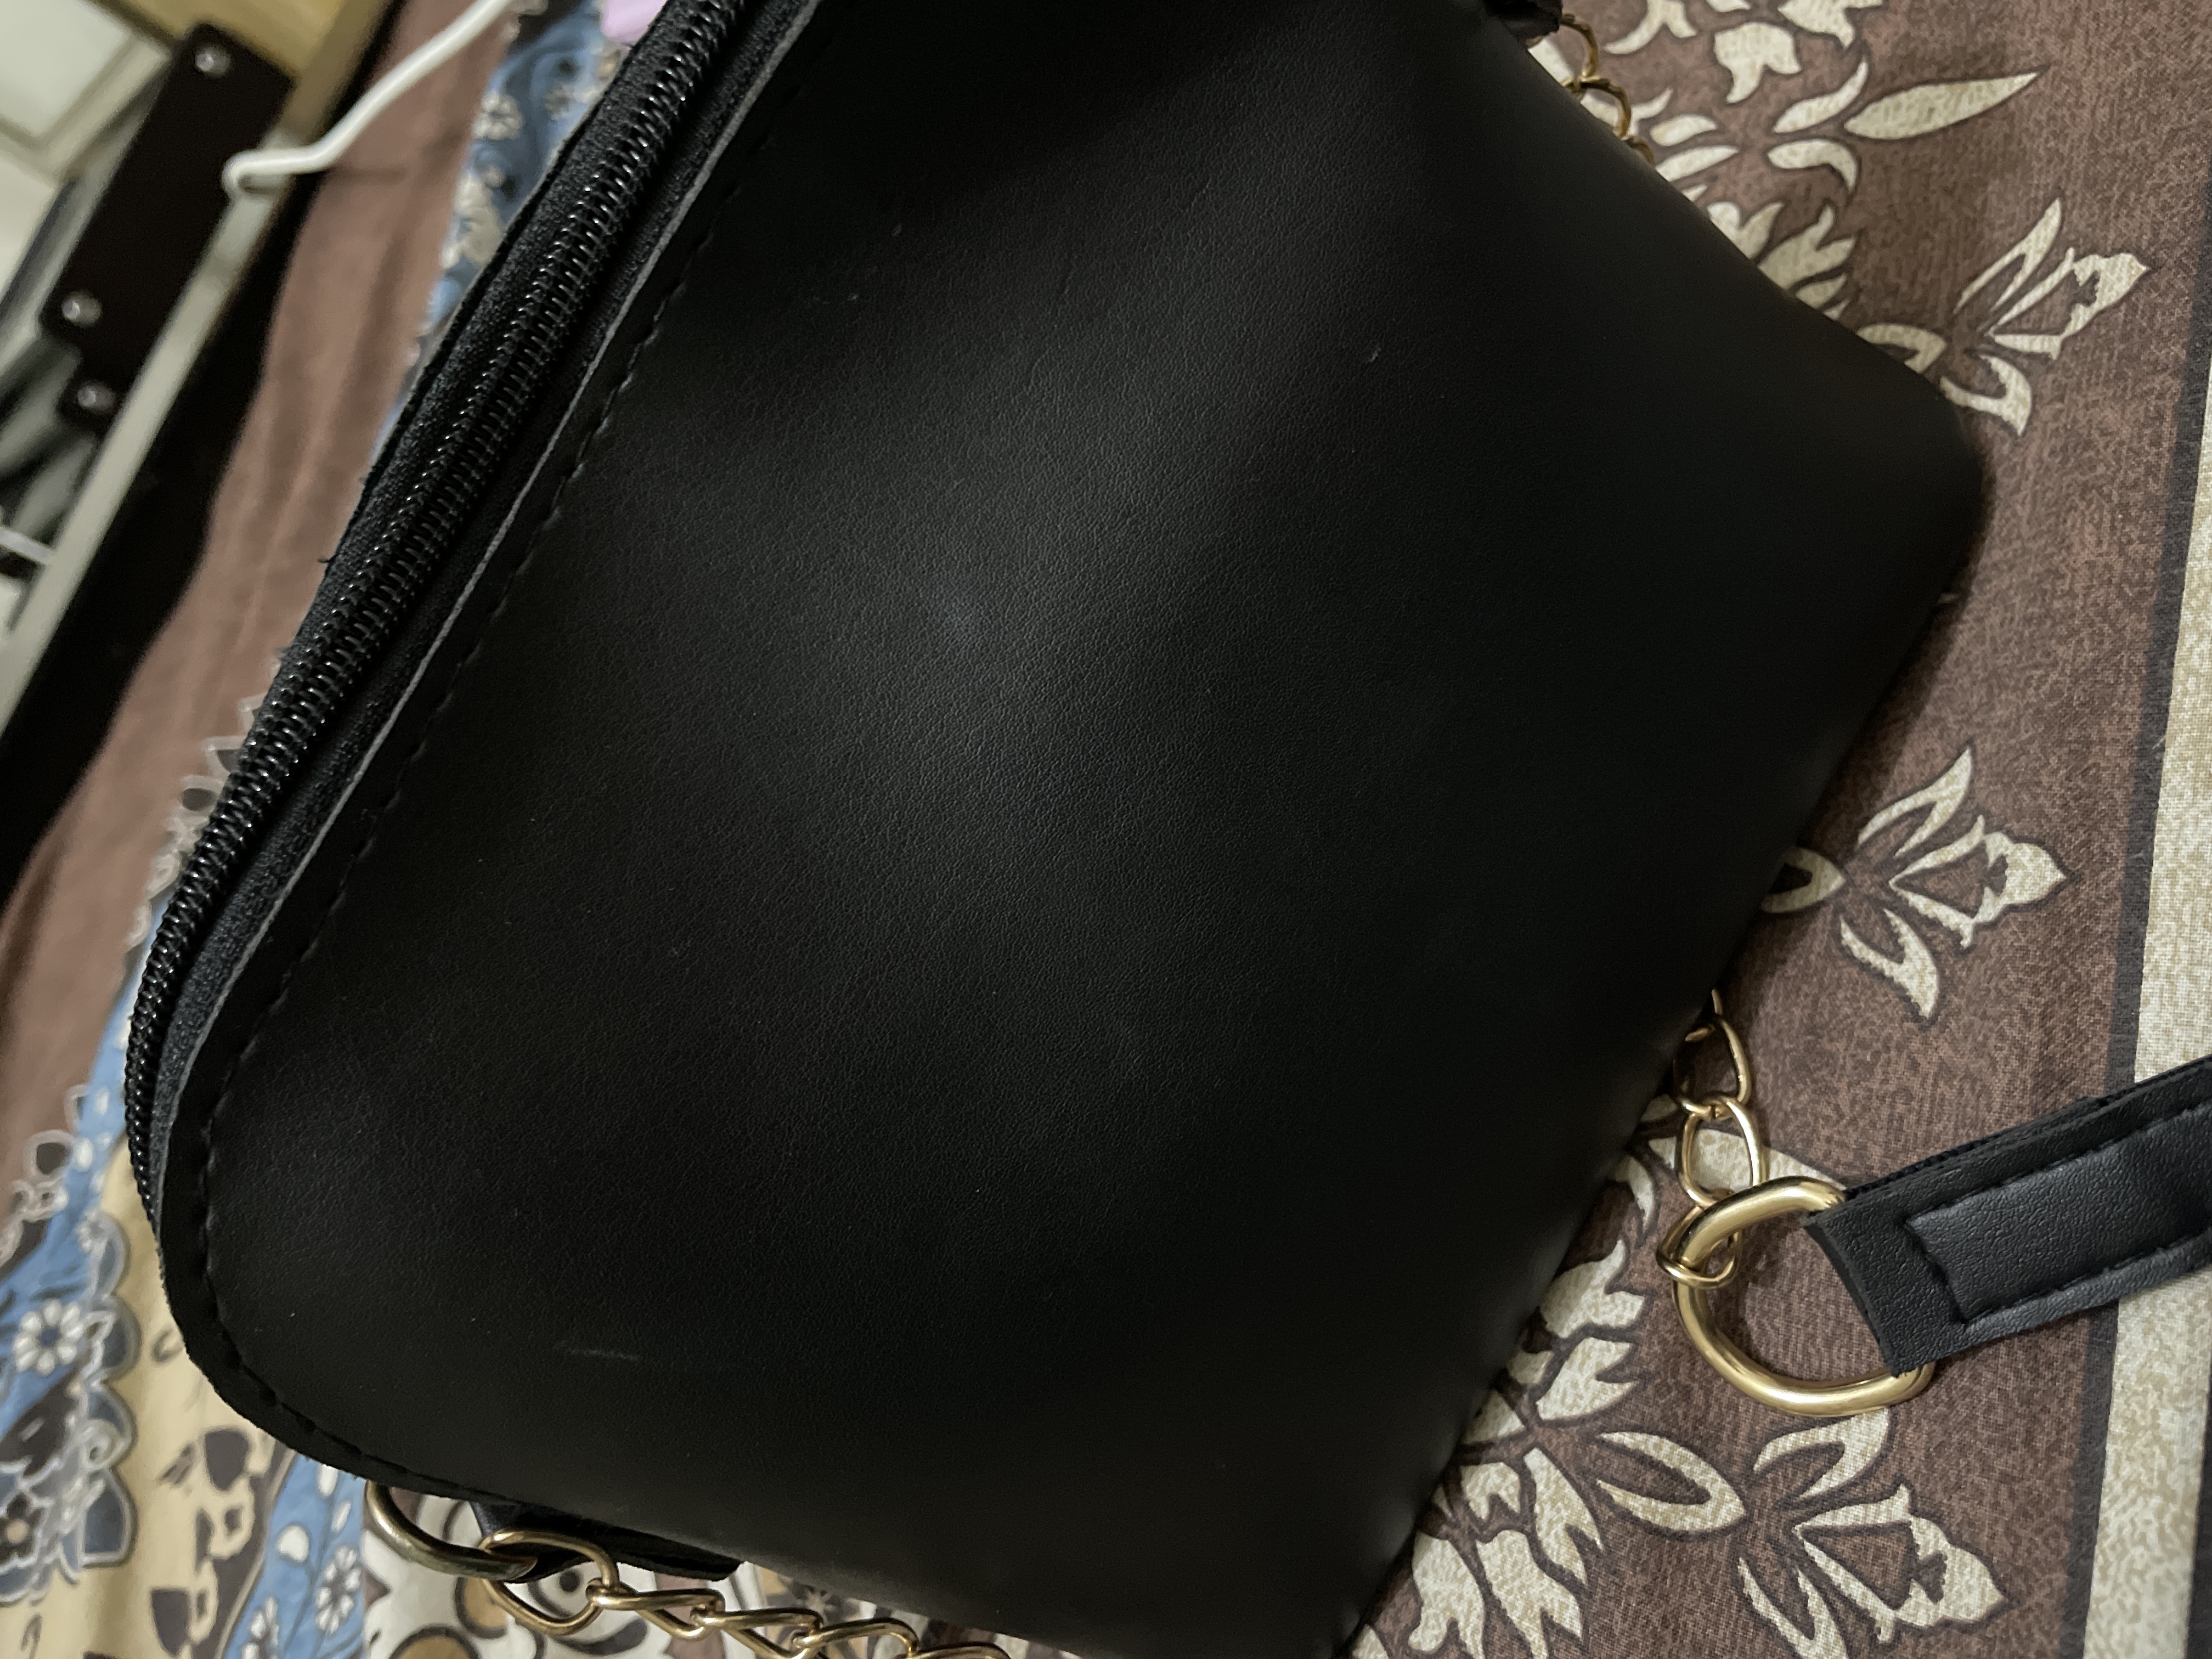 ASTORE New Collection of Bags & Abayas - Ample HandBag - Black Abaya (008)  Shop now at www.astore.pk #handbags #leather #handmade…